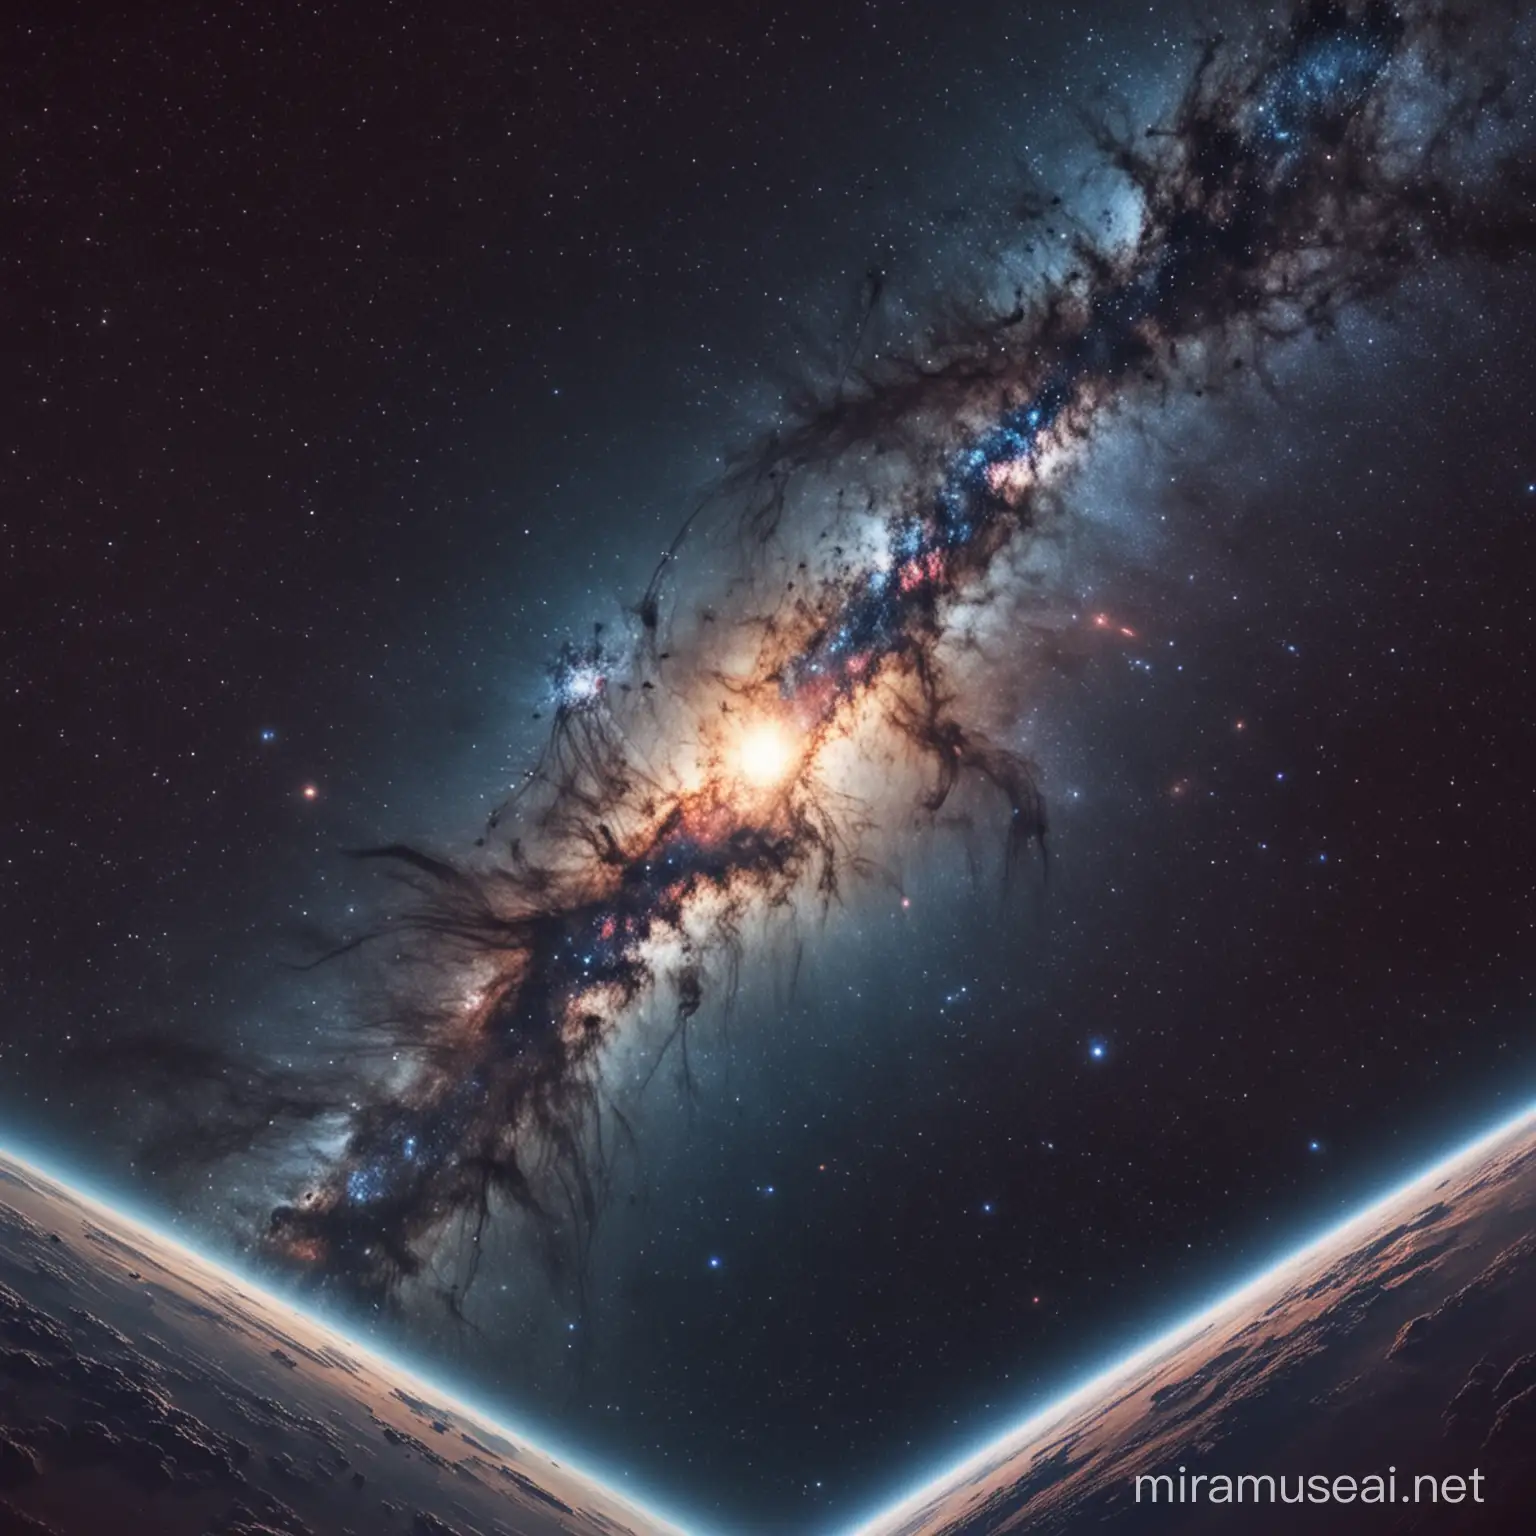 Vibrant Nebula Amidst Celestial Clouds